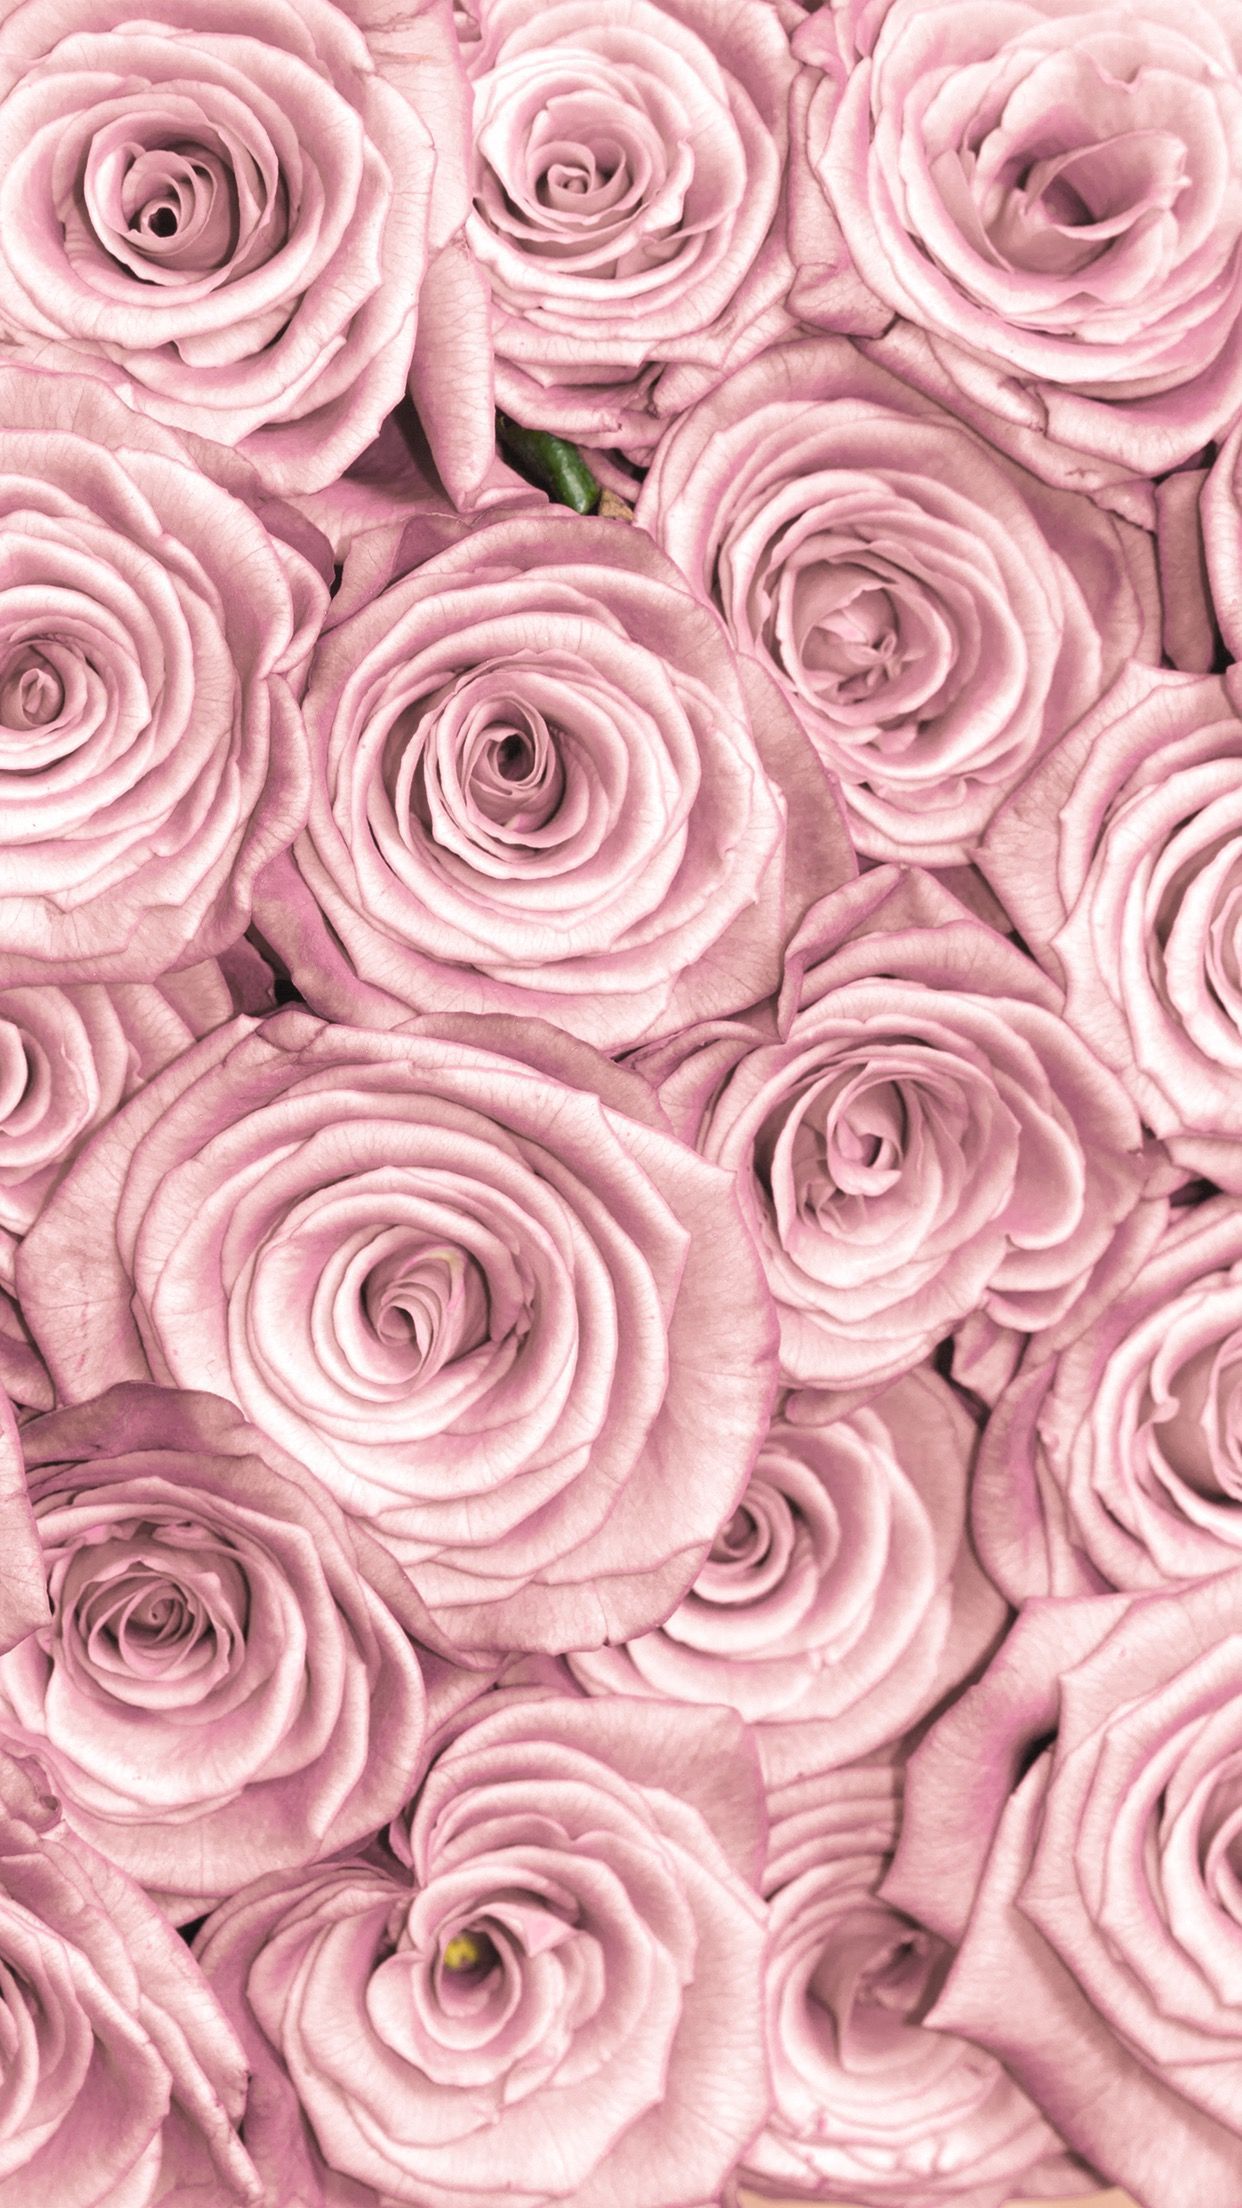 pink rose background images